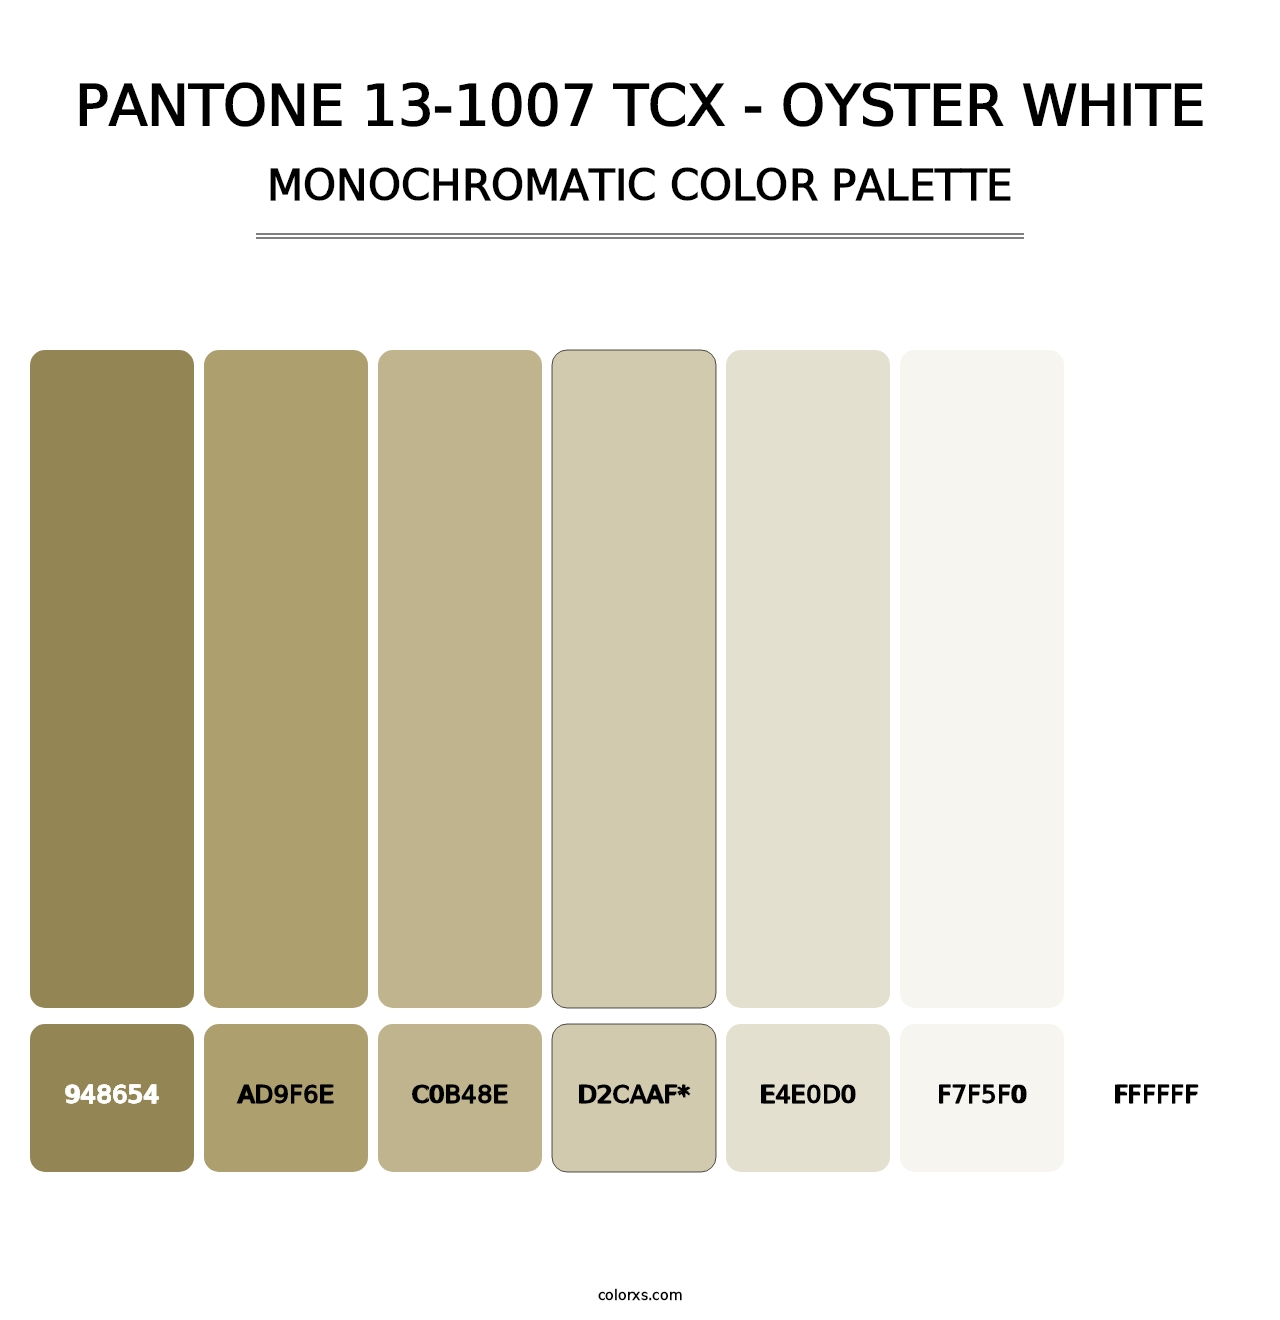 PANTONE 13-1007 TCX - Oyster White - Monochromatic Color Palette